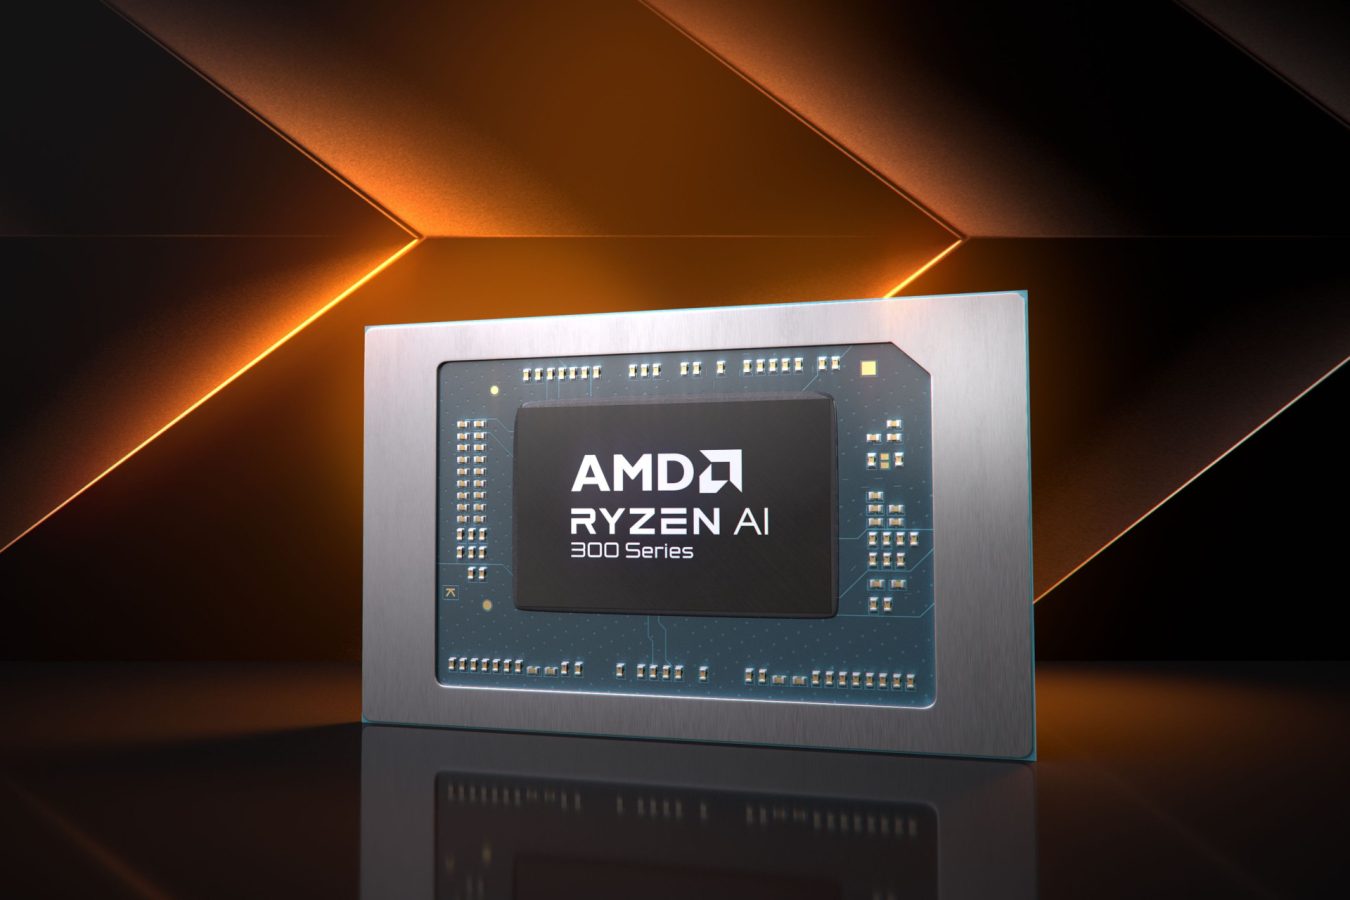 procesor AMD Ryzen AI 300